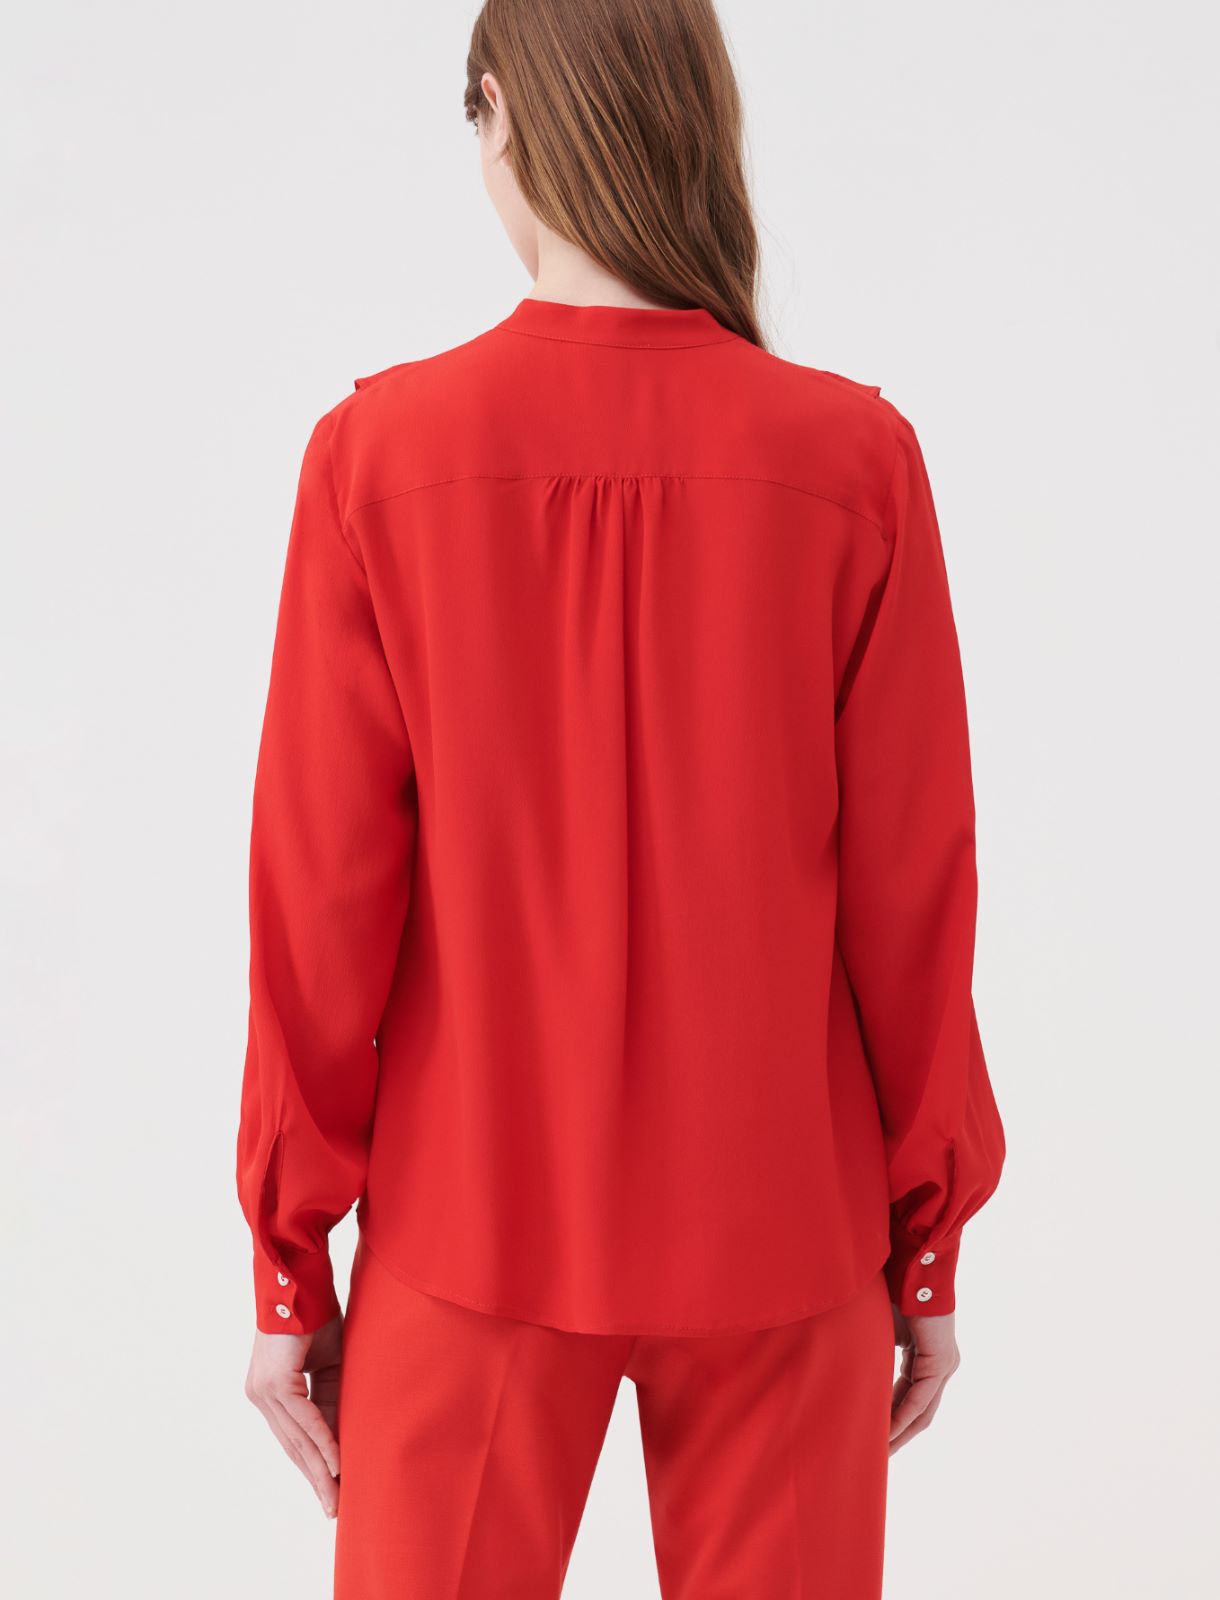 Ruched shirt - Red - Marella - 2